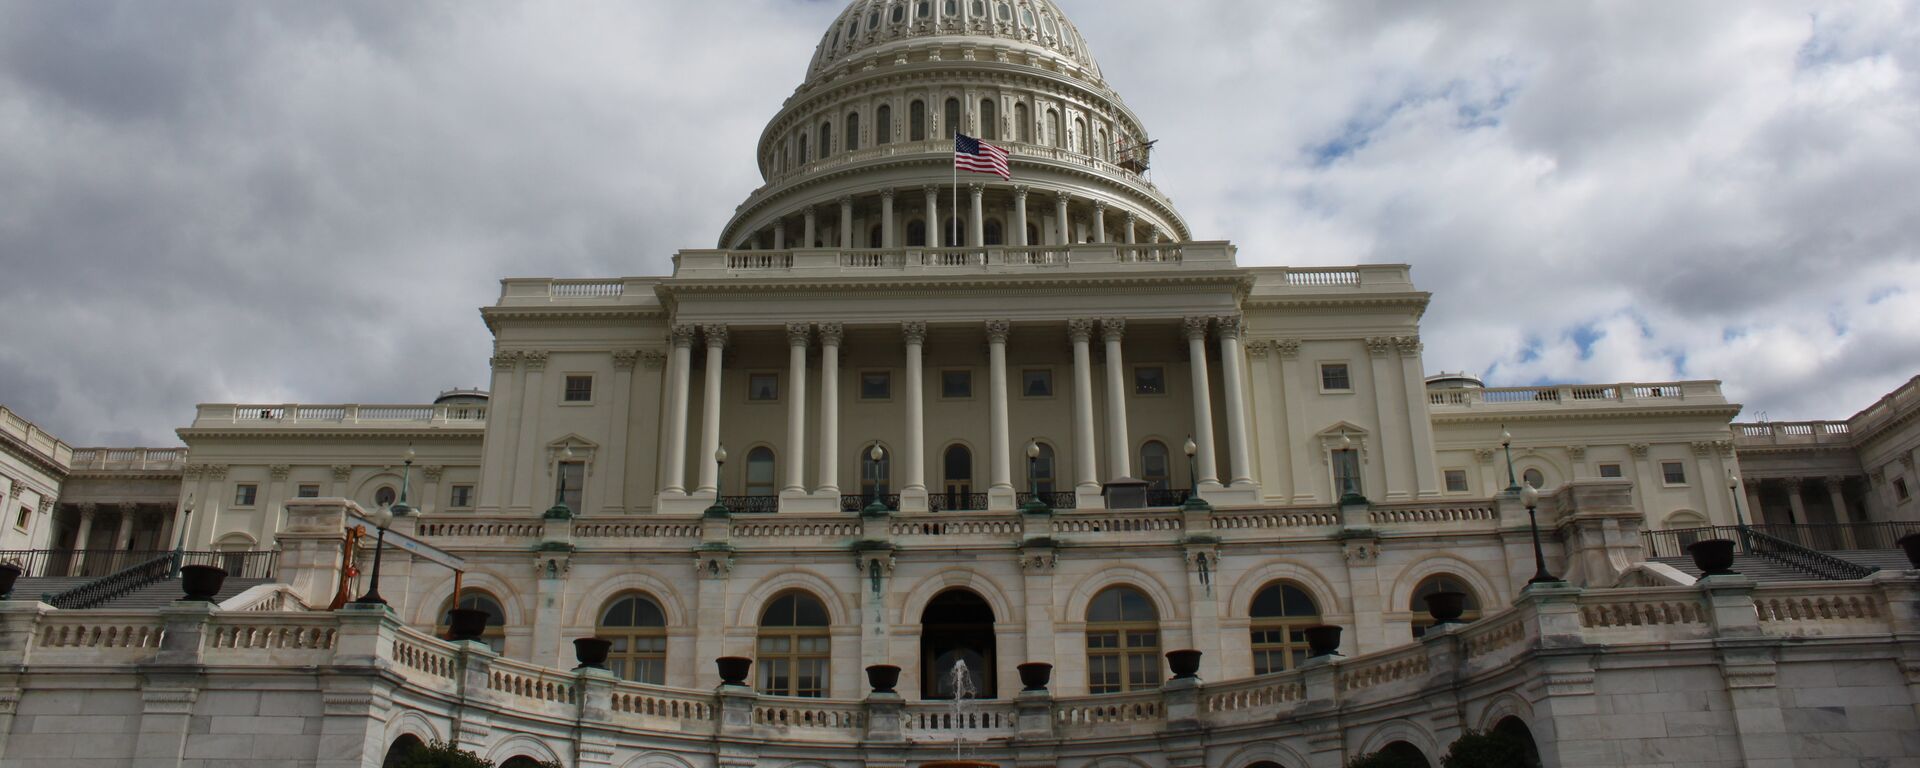 USA Freedom Act Passes US House Vote, Moves to Senate - Sputnik International, 1920, 12.01.2016